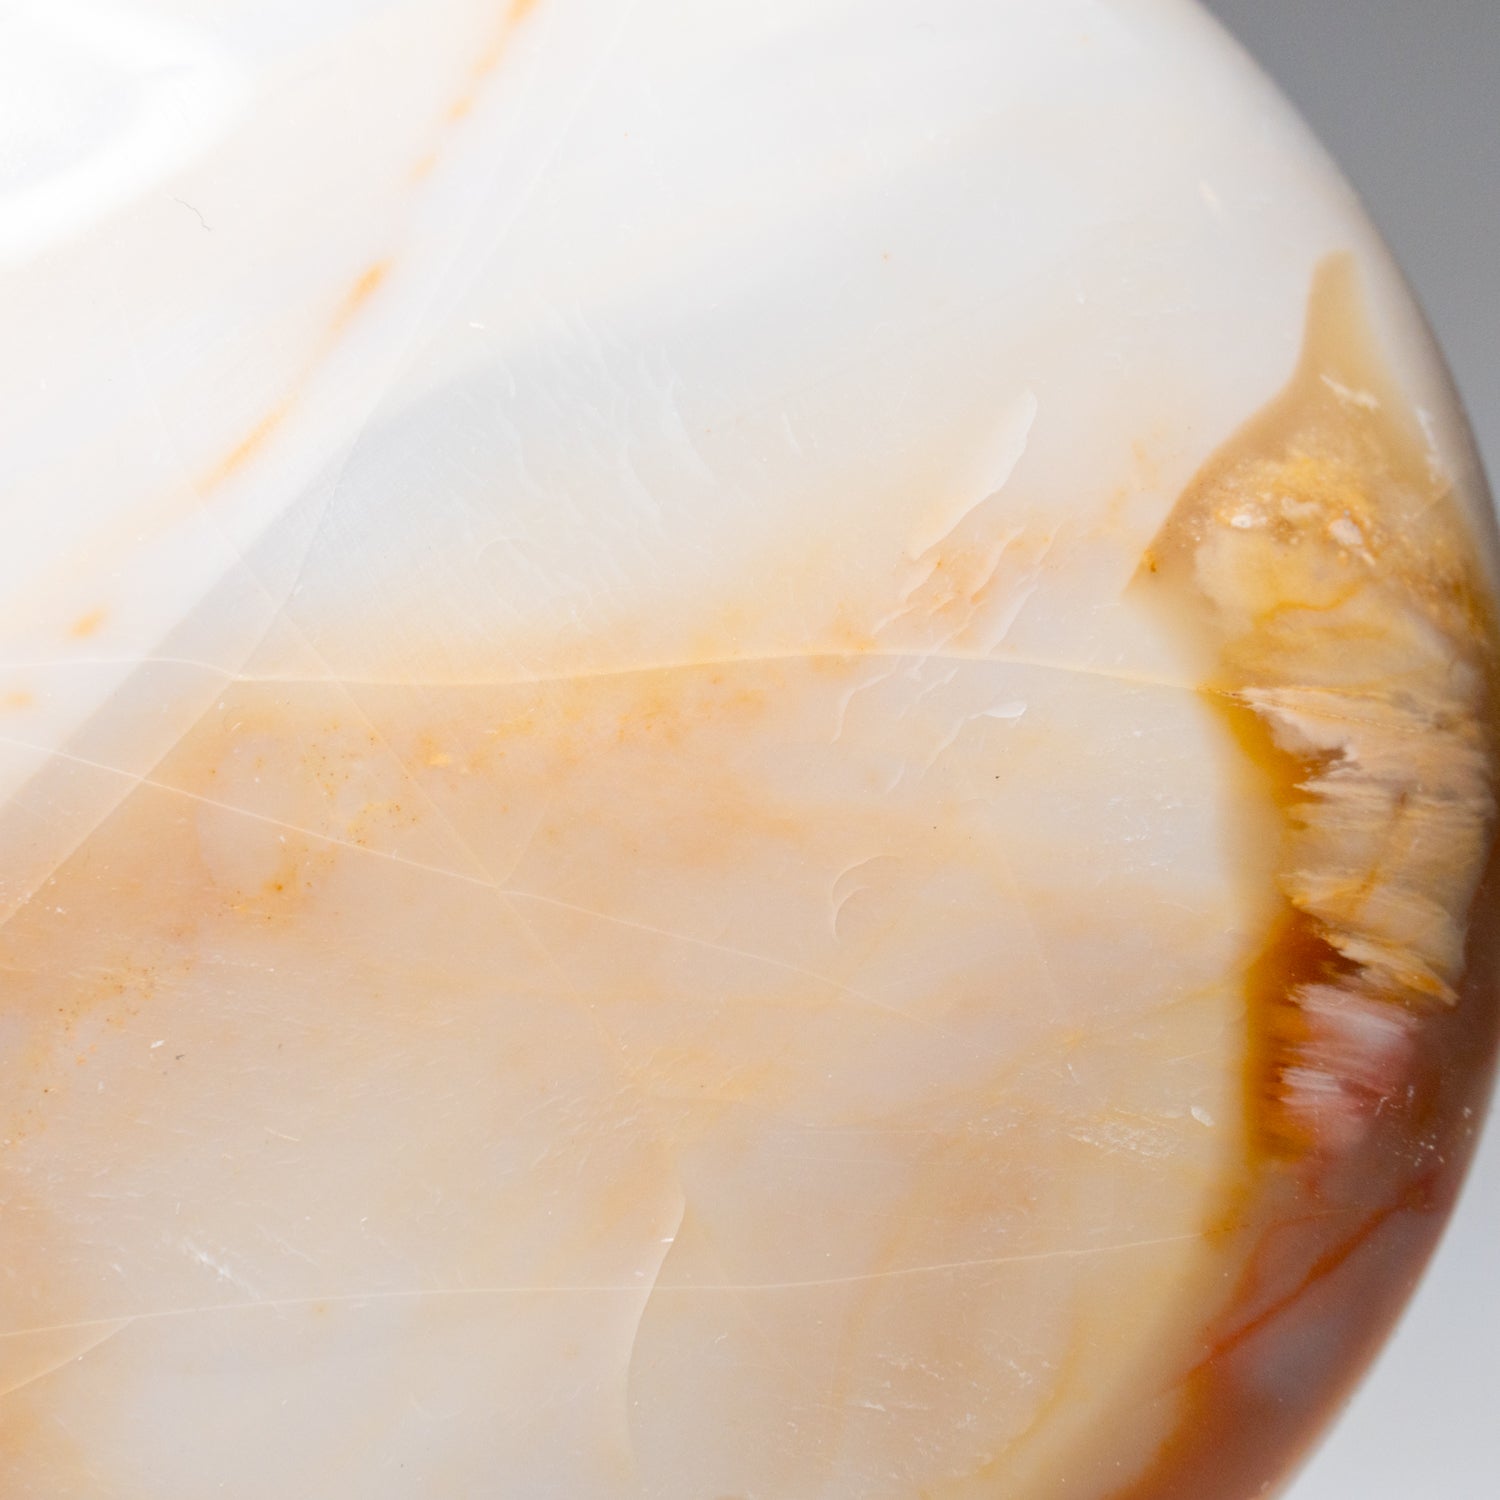 Genuine Polished Polychrome Jasper Heart from Madagascar (424.4 grams)